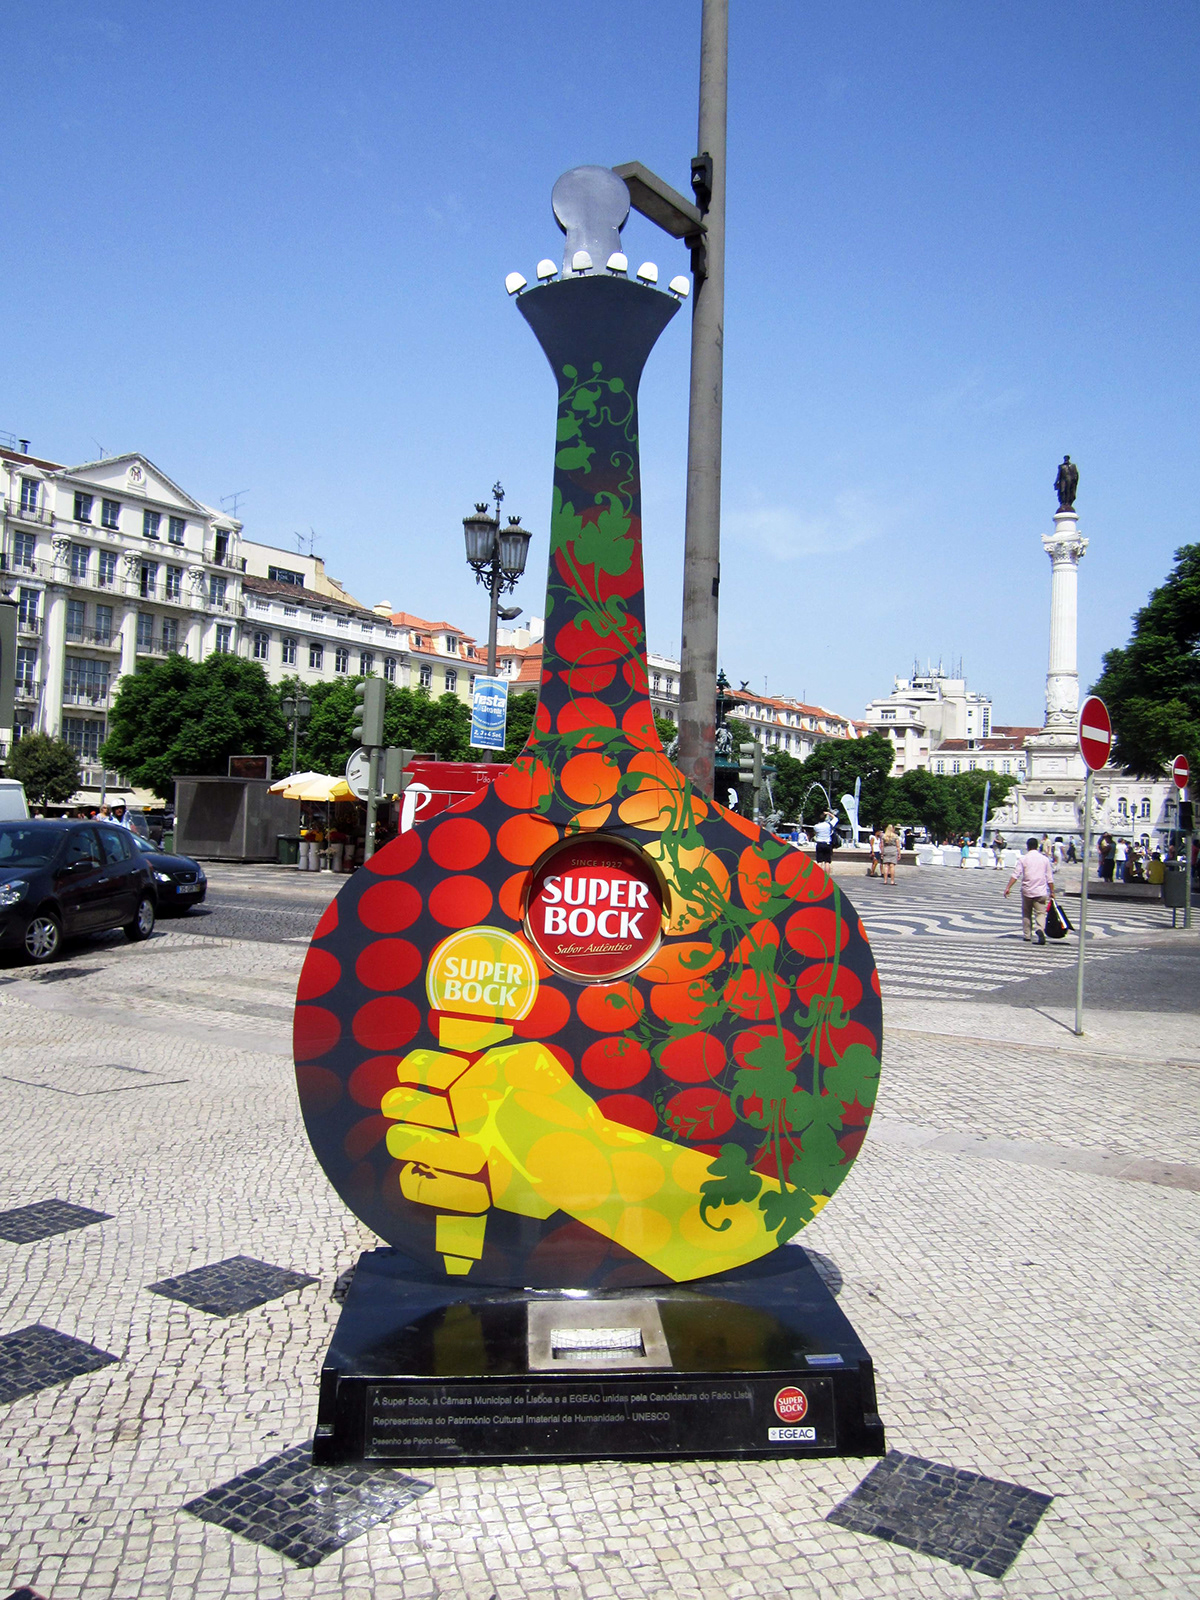 super bock guitar portuguese guitar Lisbon rossio